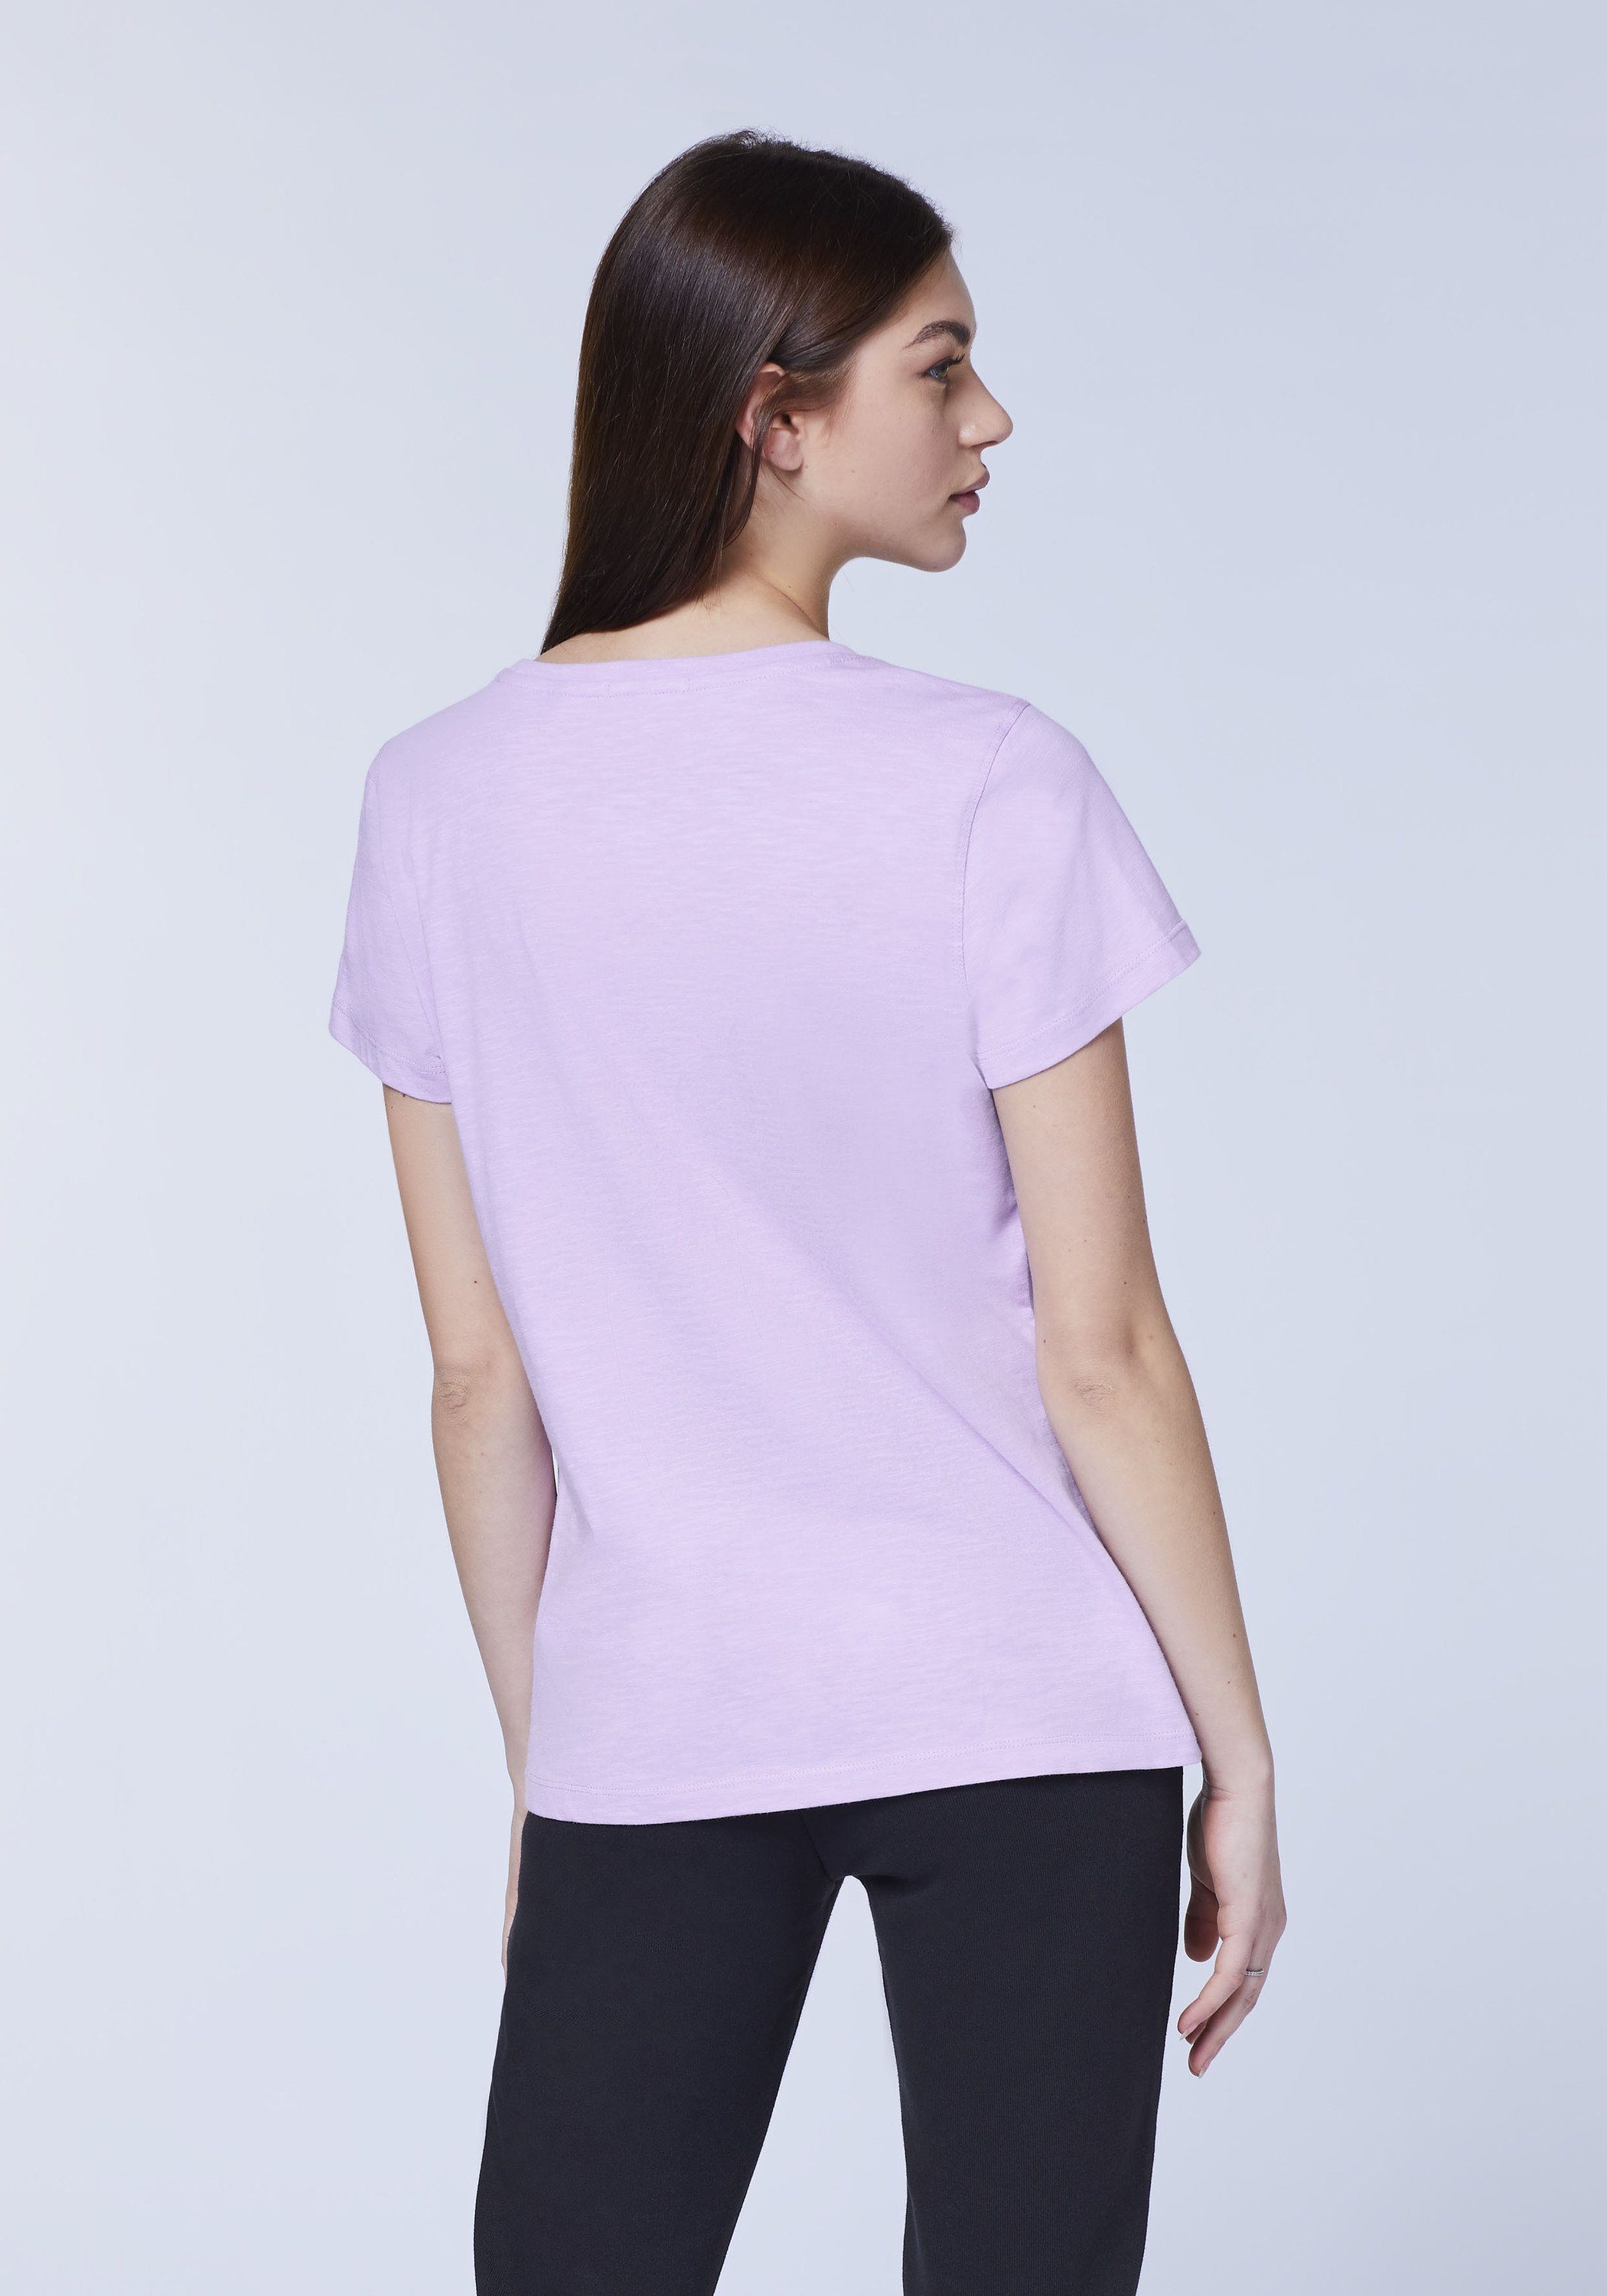 Chiemsee Print-Shirt Jumper-Frontprint Purple Rose 1 15-3716 mit T-Shirt